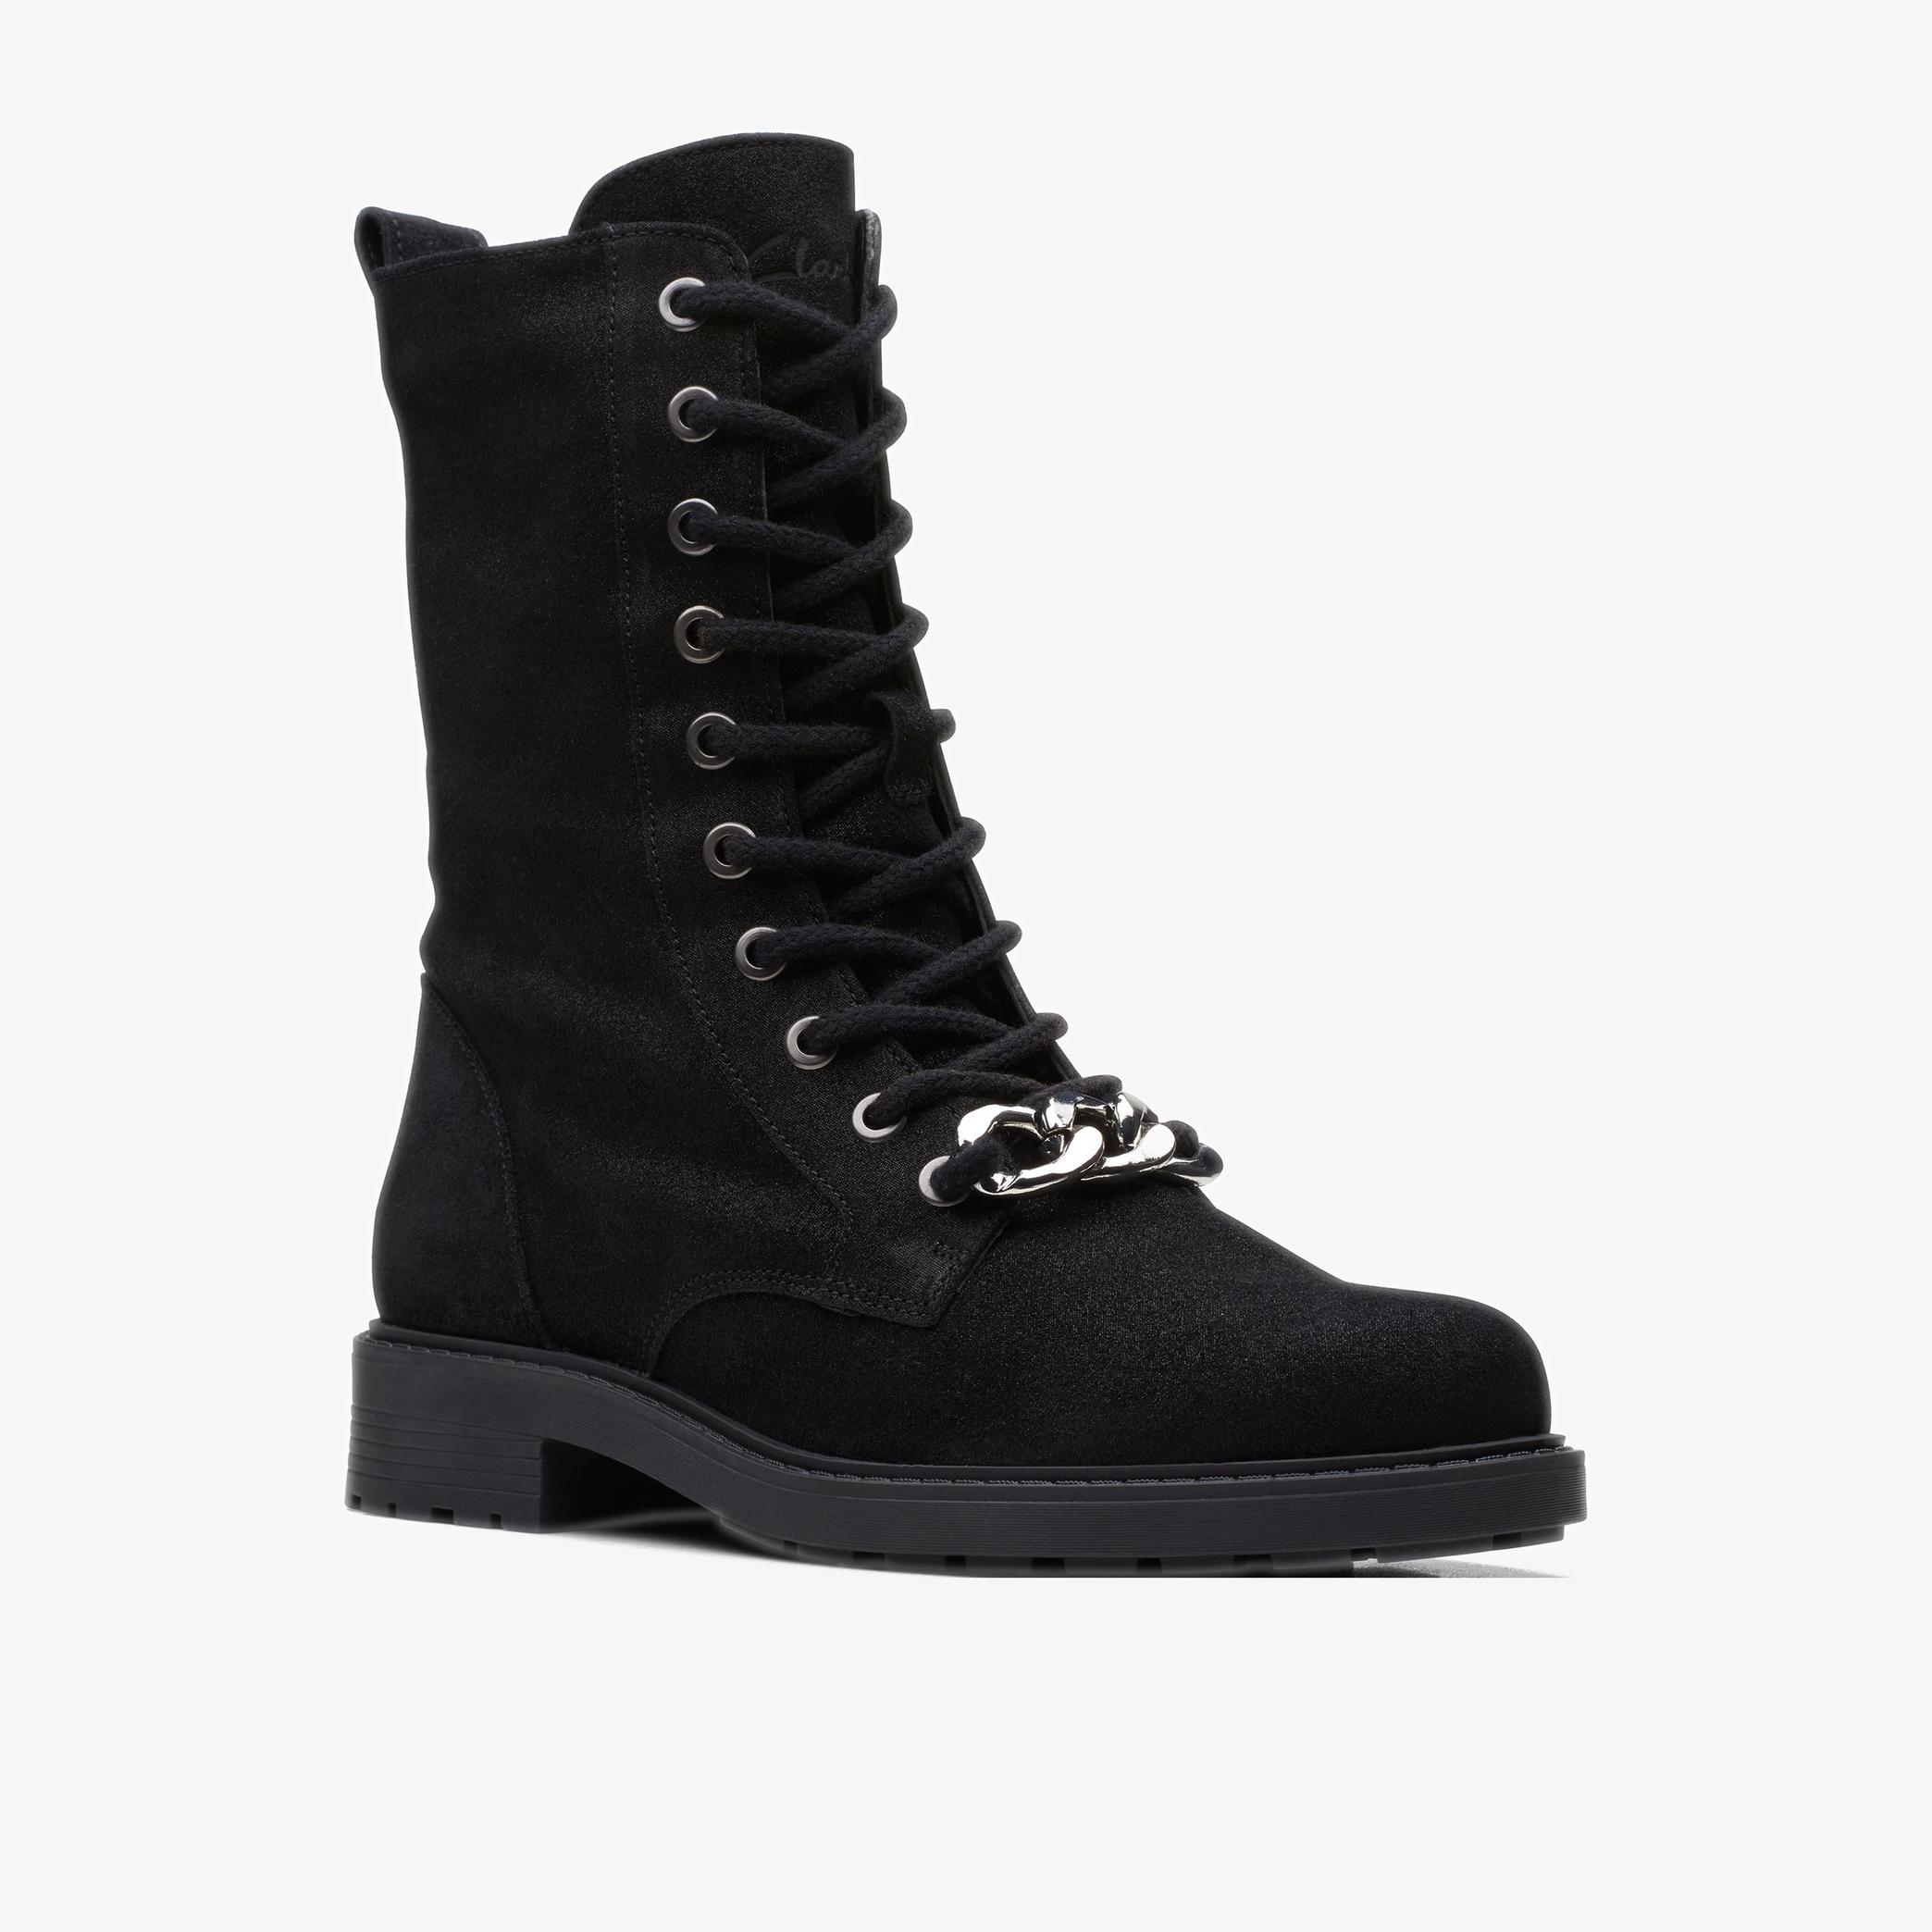 Orinoco2 Style Black Metallic Ankle Boots, view 3 of 6